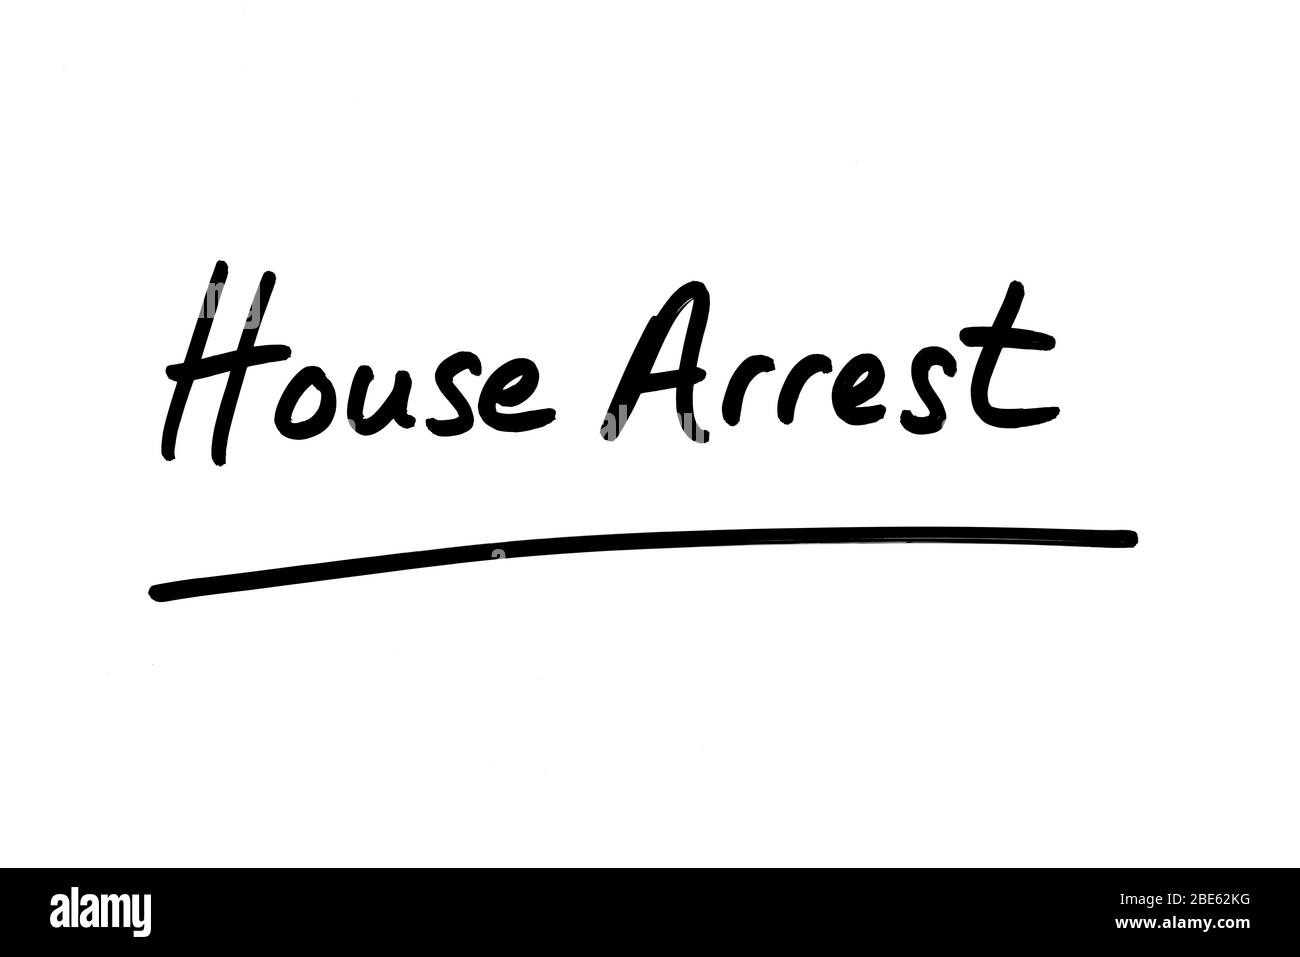 House Arrest handwritten on a white background. Stock Photo